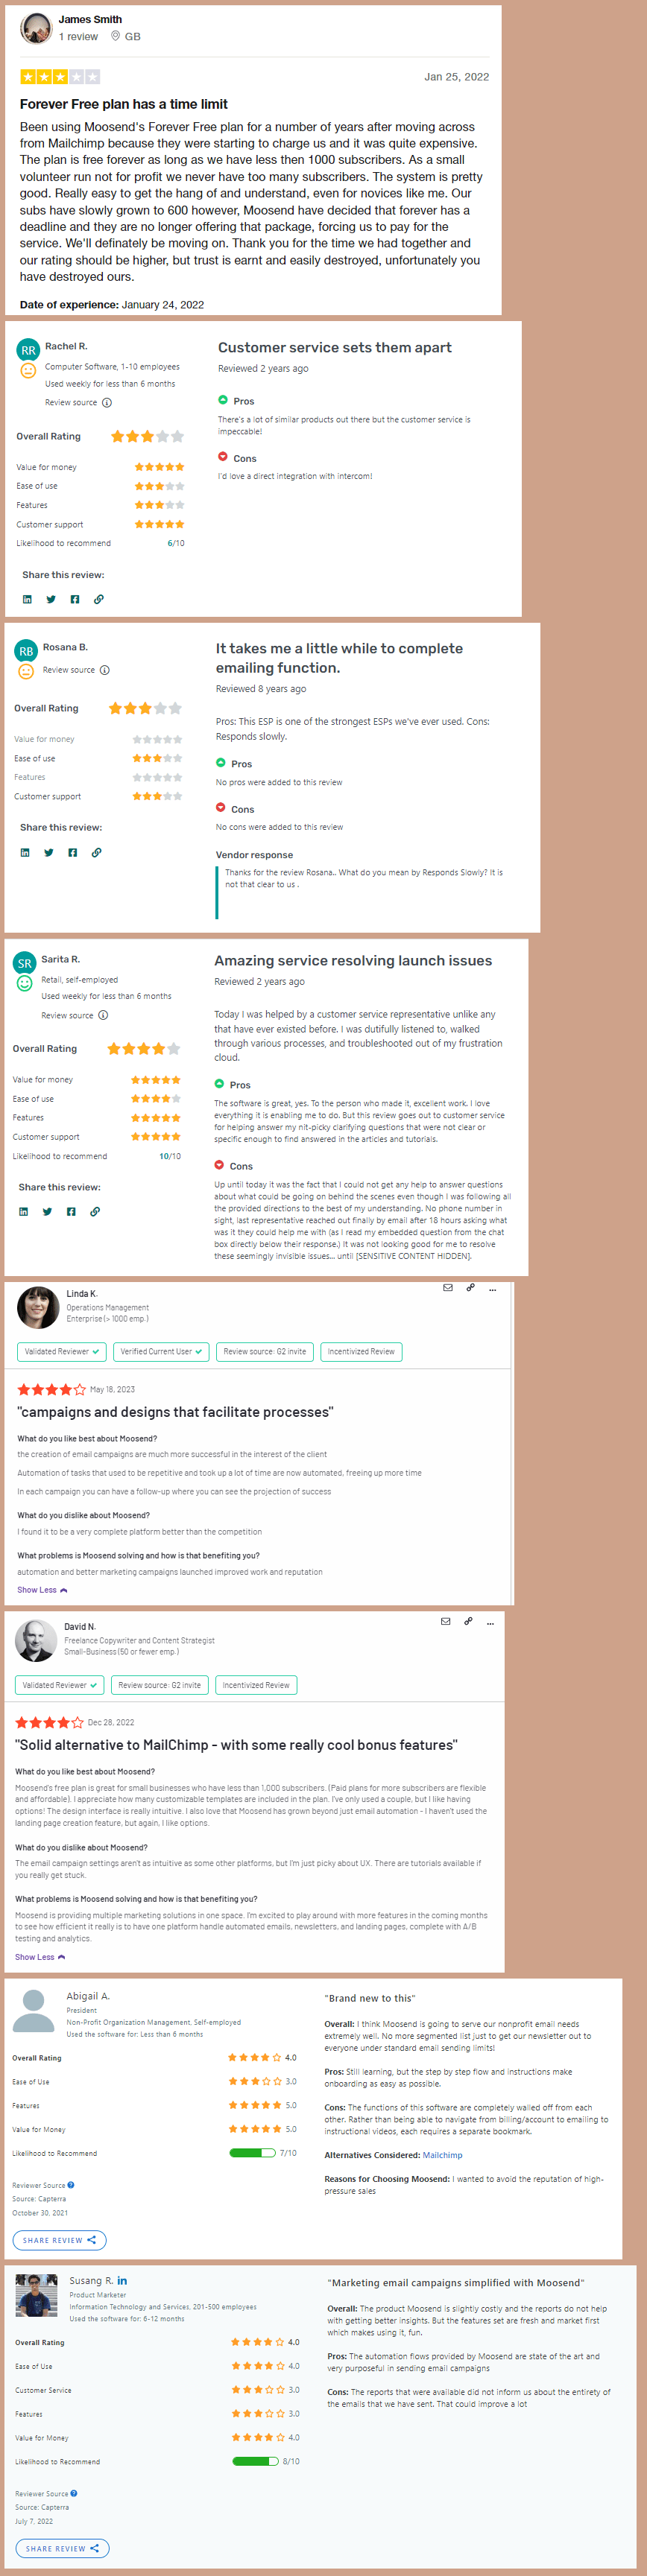 Moosend - Mixed User Reviews